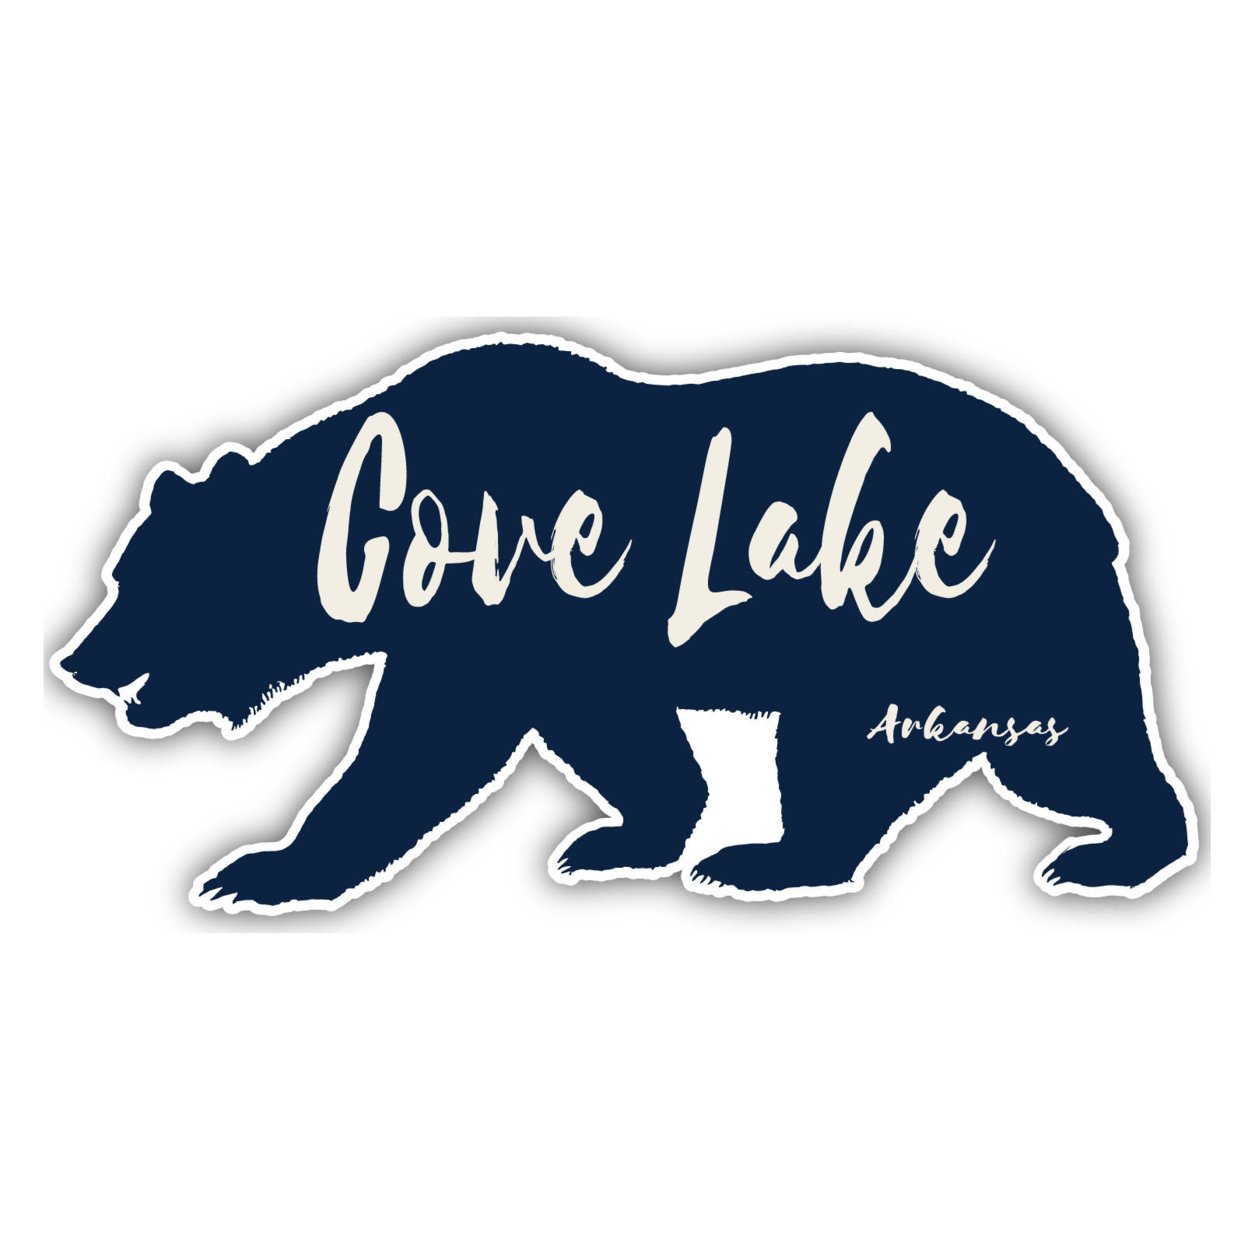 Cove Lake Arkansas Souvenir Decorative Stickers (Choose Theme And Size) - 4-Pack, 2-Inch, Bear